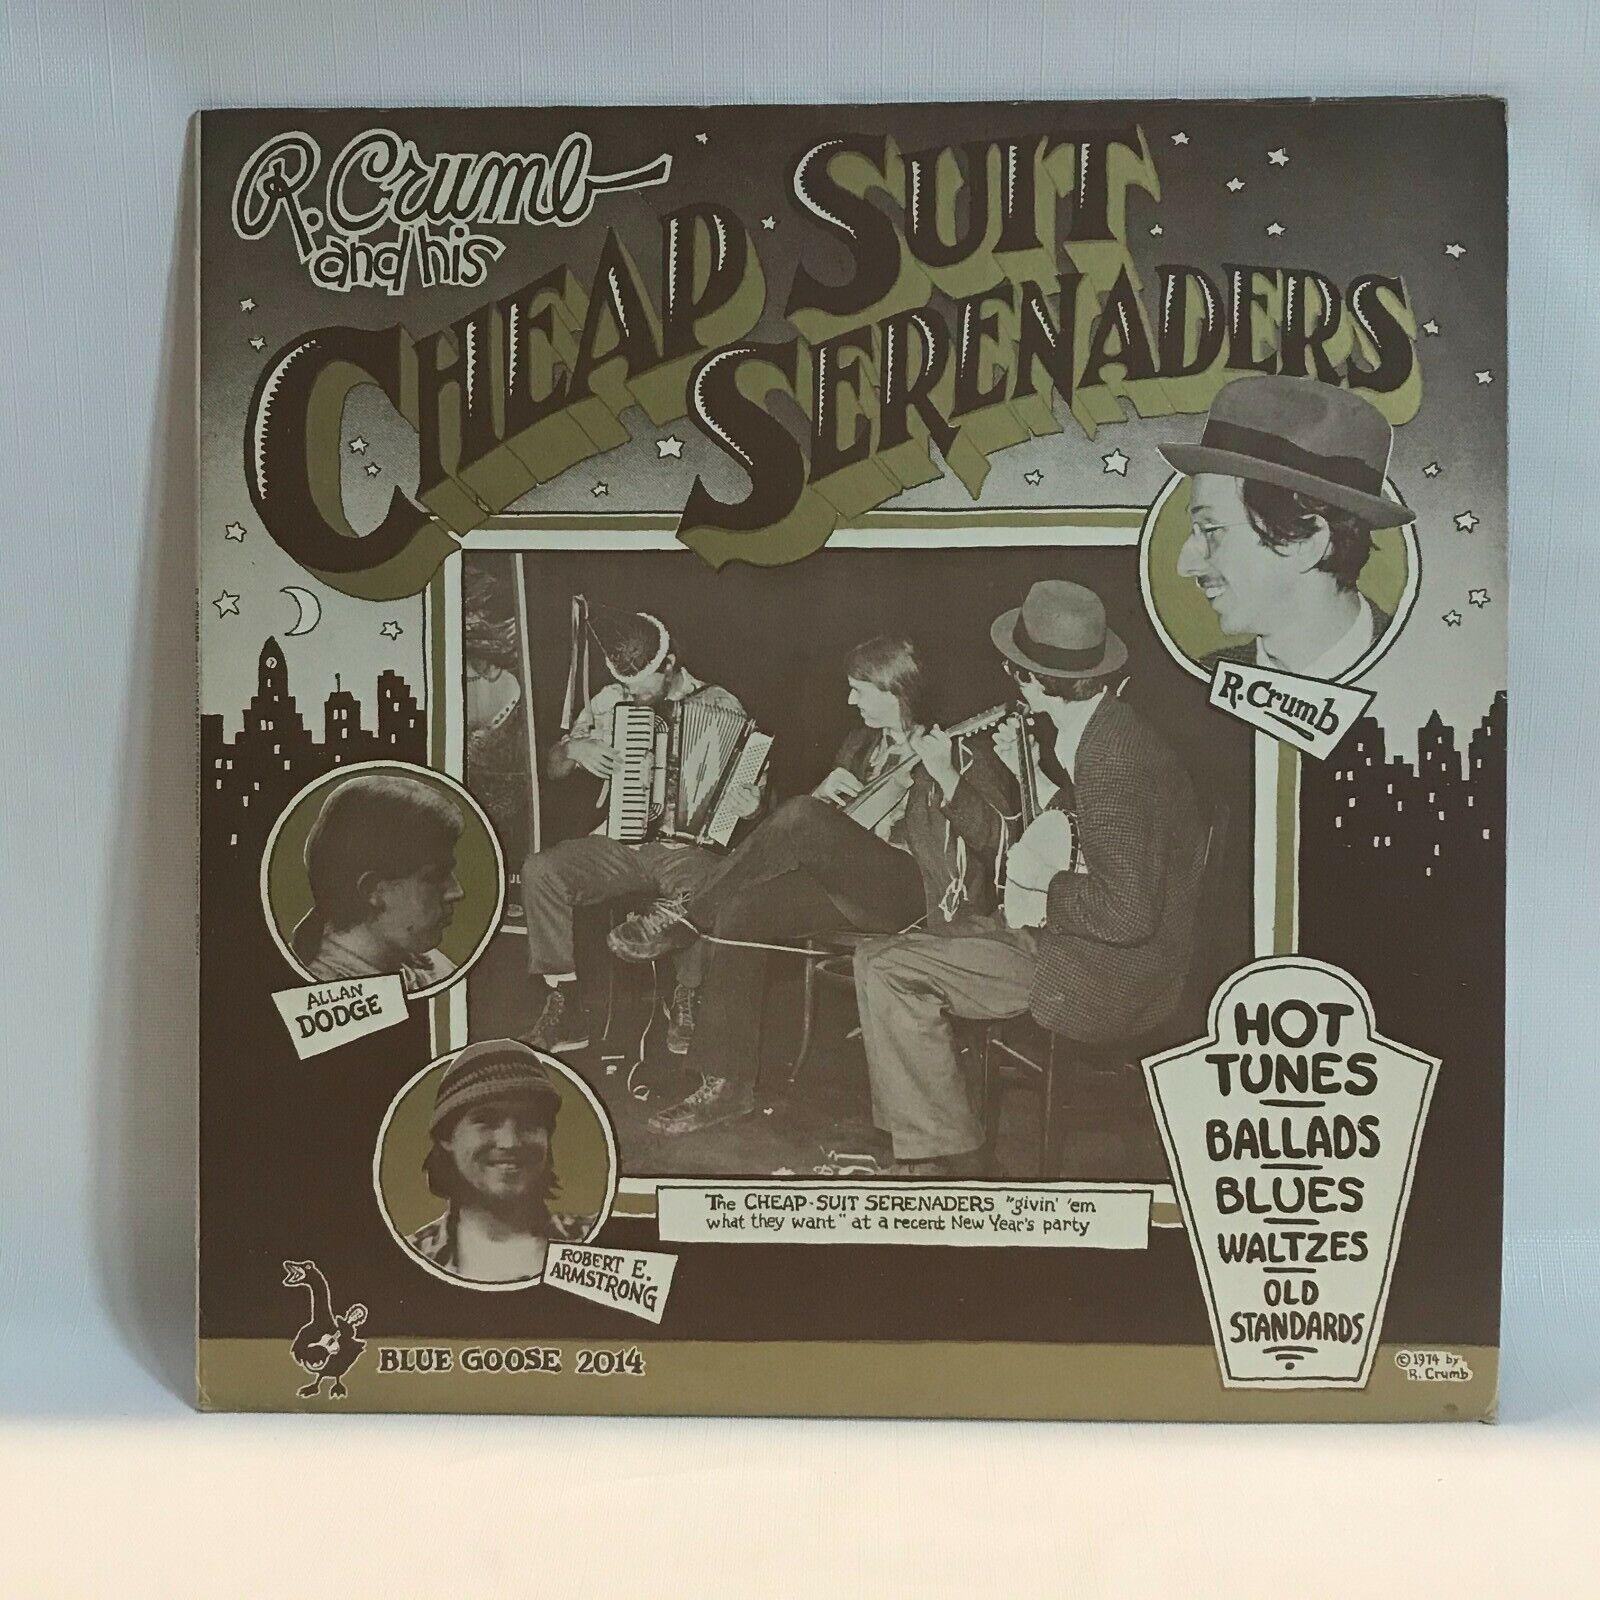 R. CRUMB & His Cheap Suit Serenaders Allan Dodge 1974 Blue Goose vinyl LP